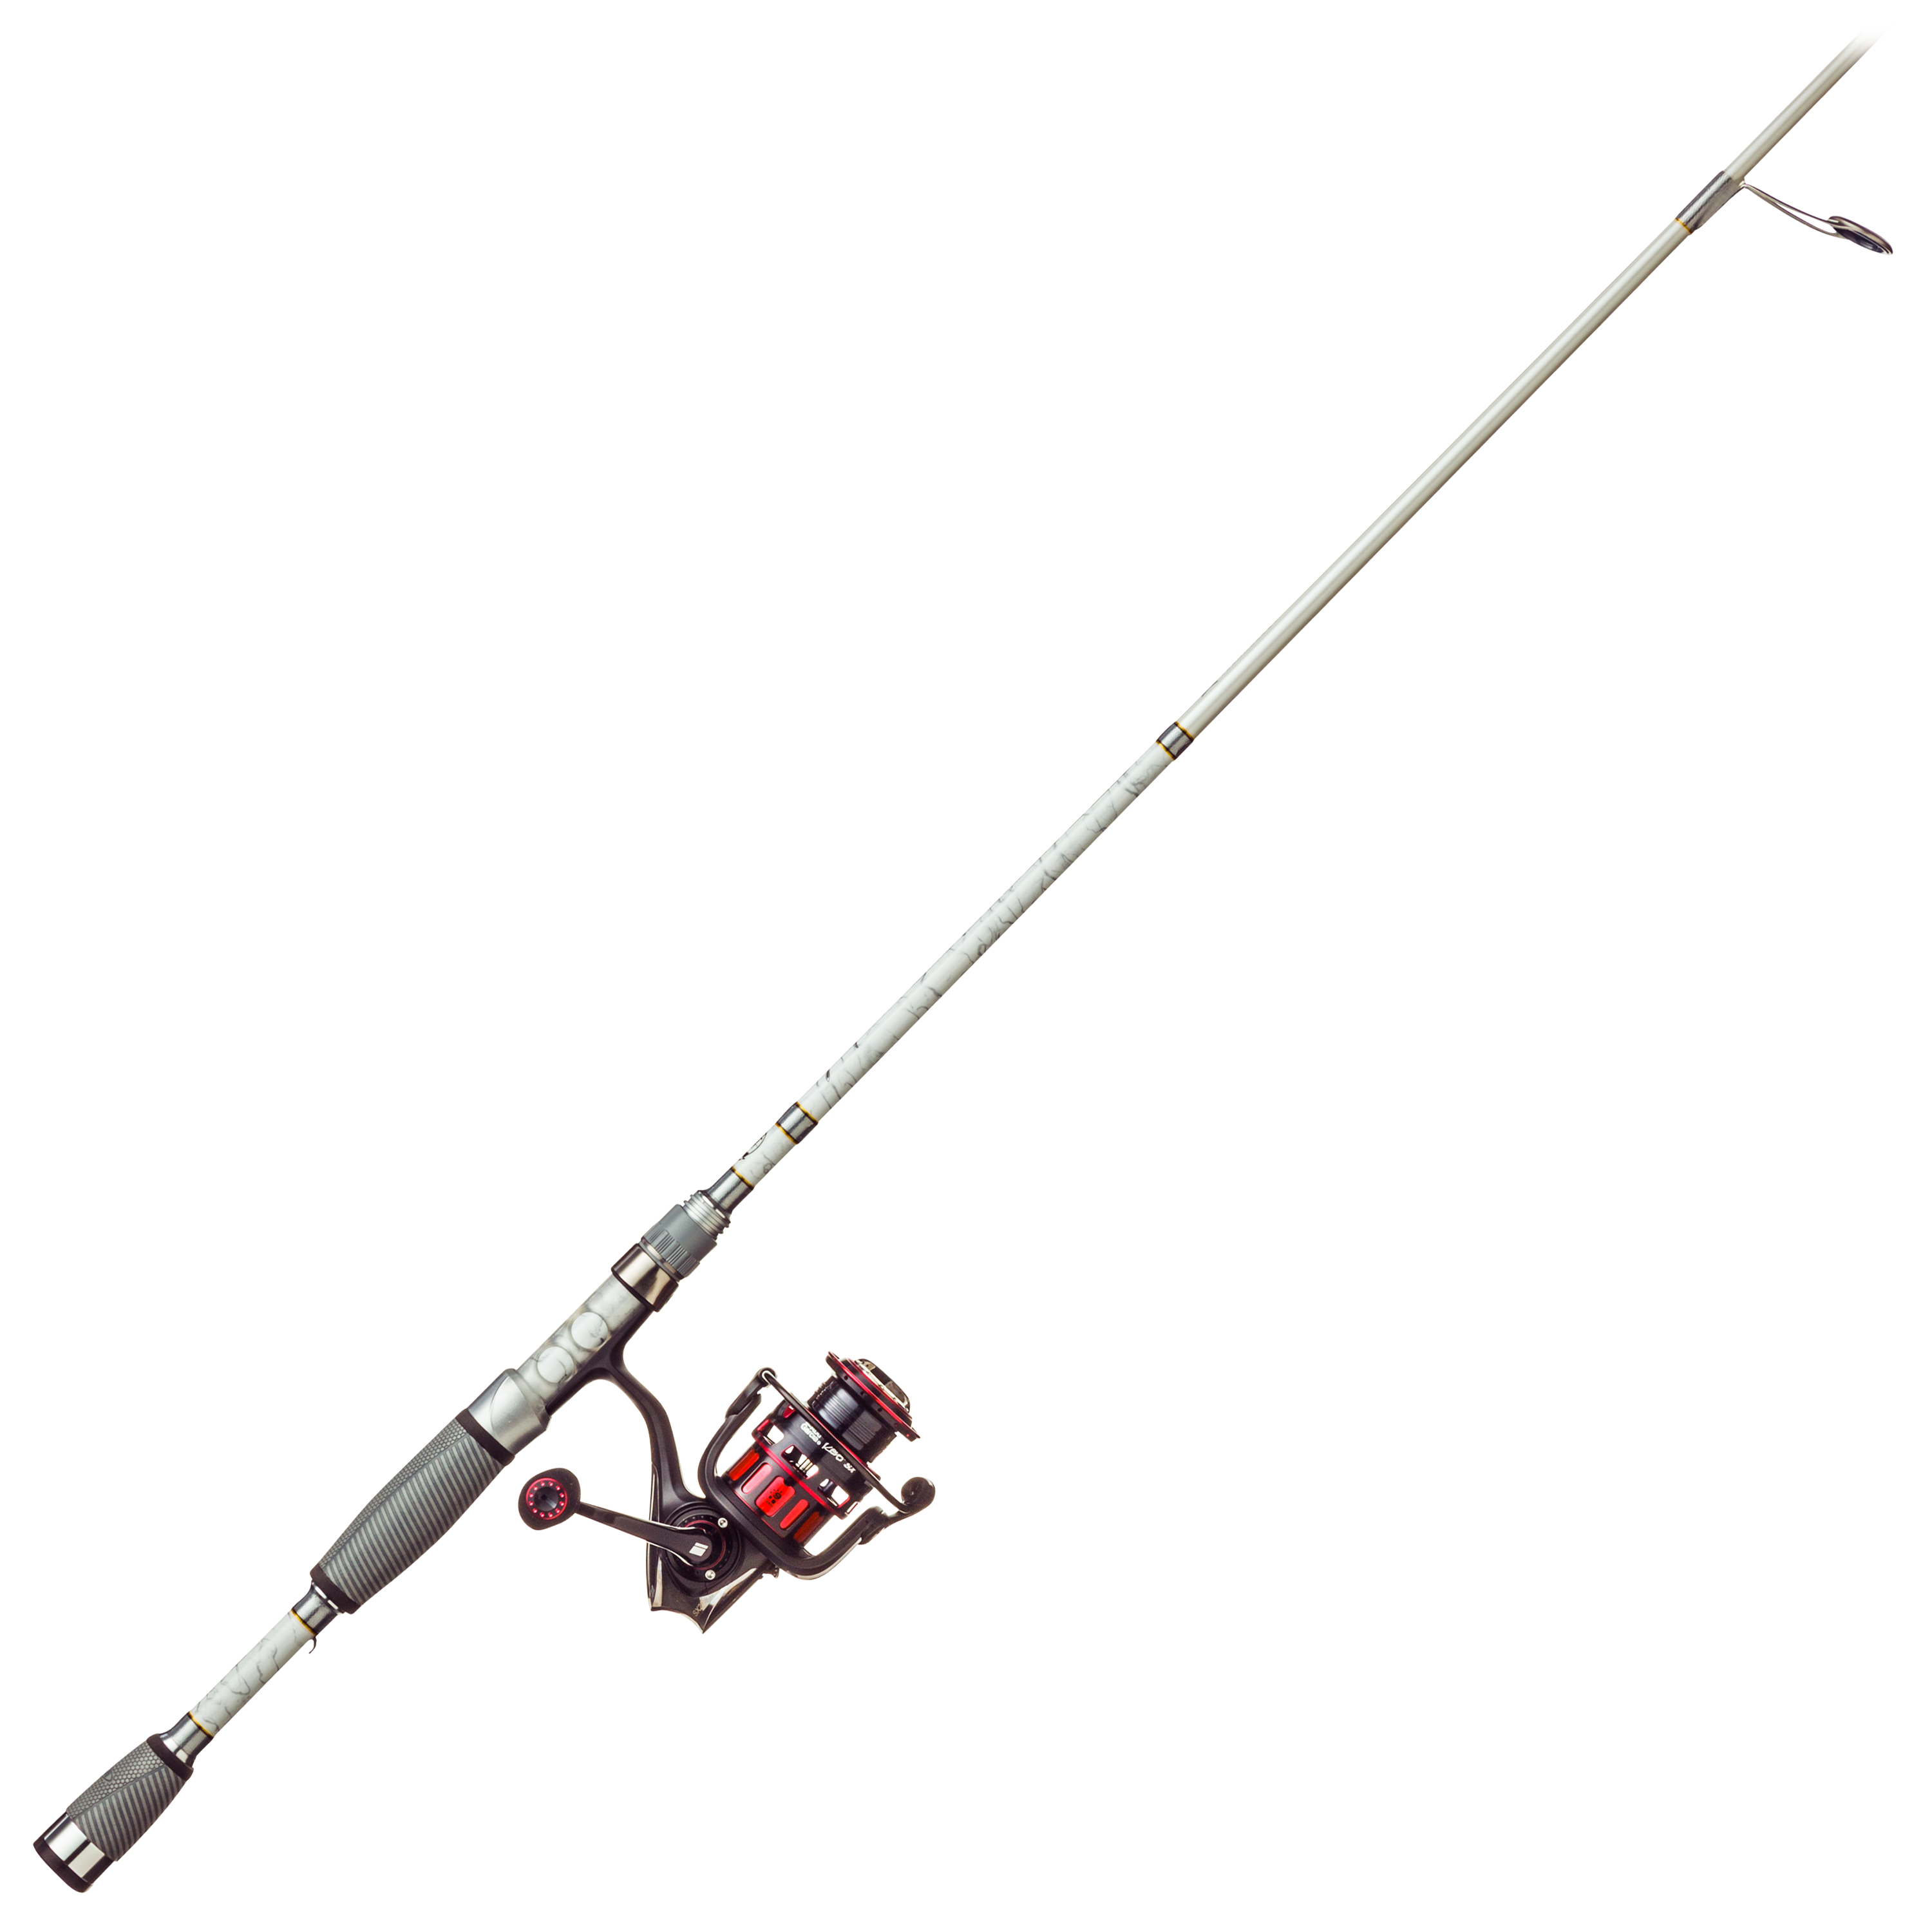 Abu Garcia Revo SX/Bass Pro Shops Johnny Morris CarbonLite Spinning Rod and Reel Combo - Model REVO2SX20/JCT66MHSF